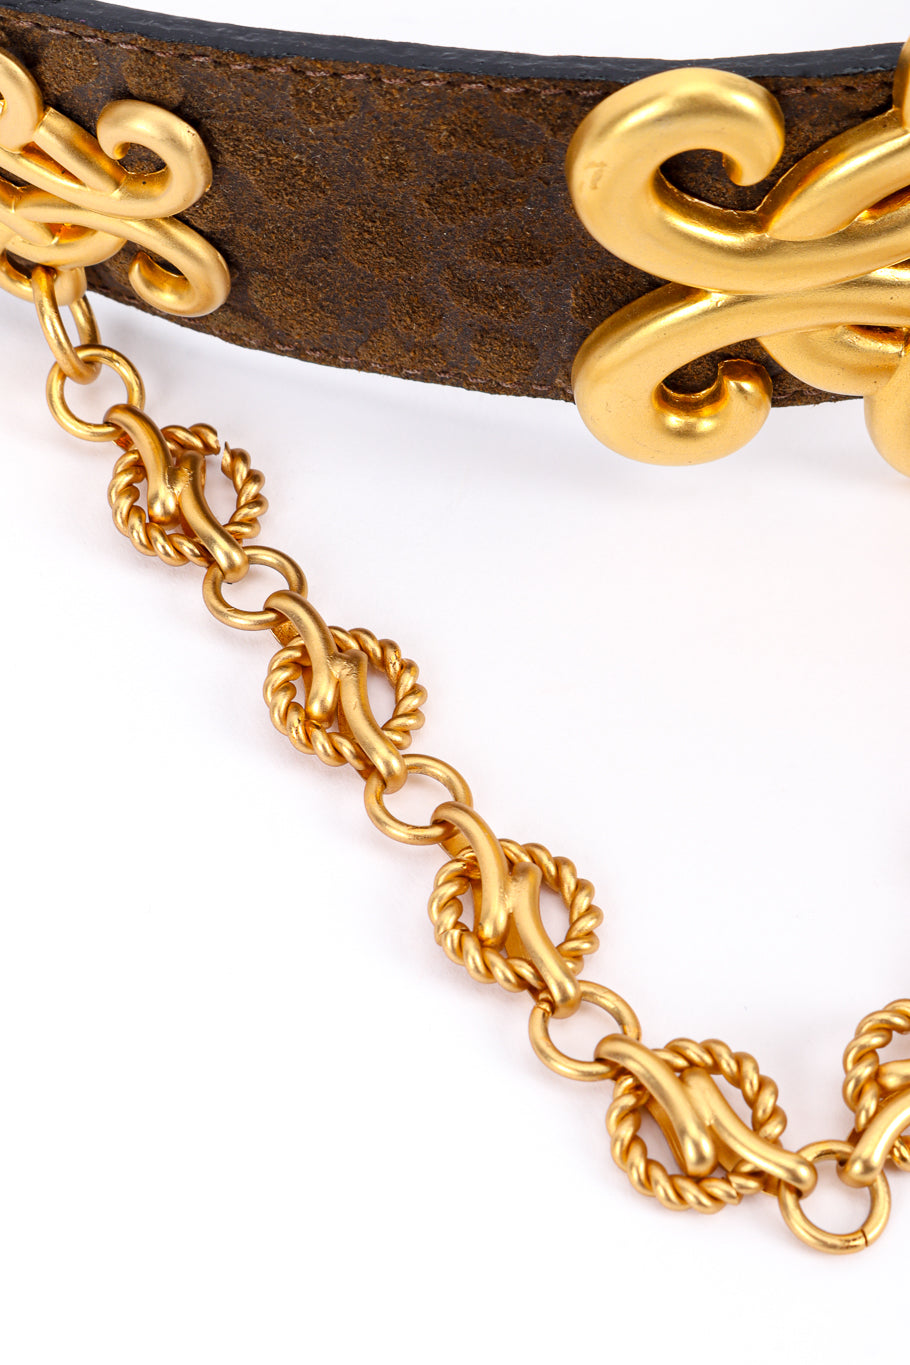 Vintage Belts by Simon Scroll Buckle Chain Drape Belt chain closeup @recessla